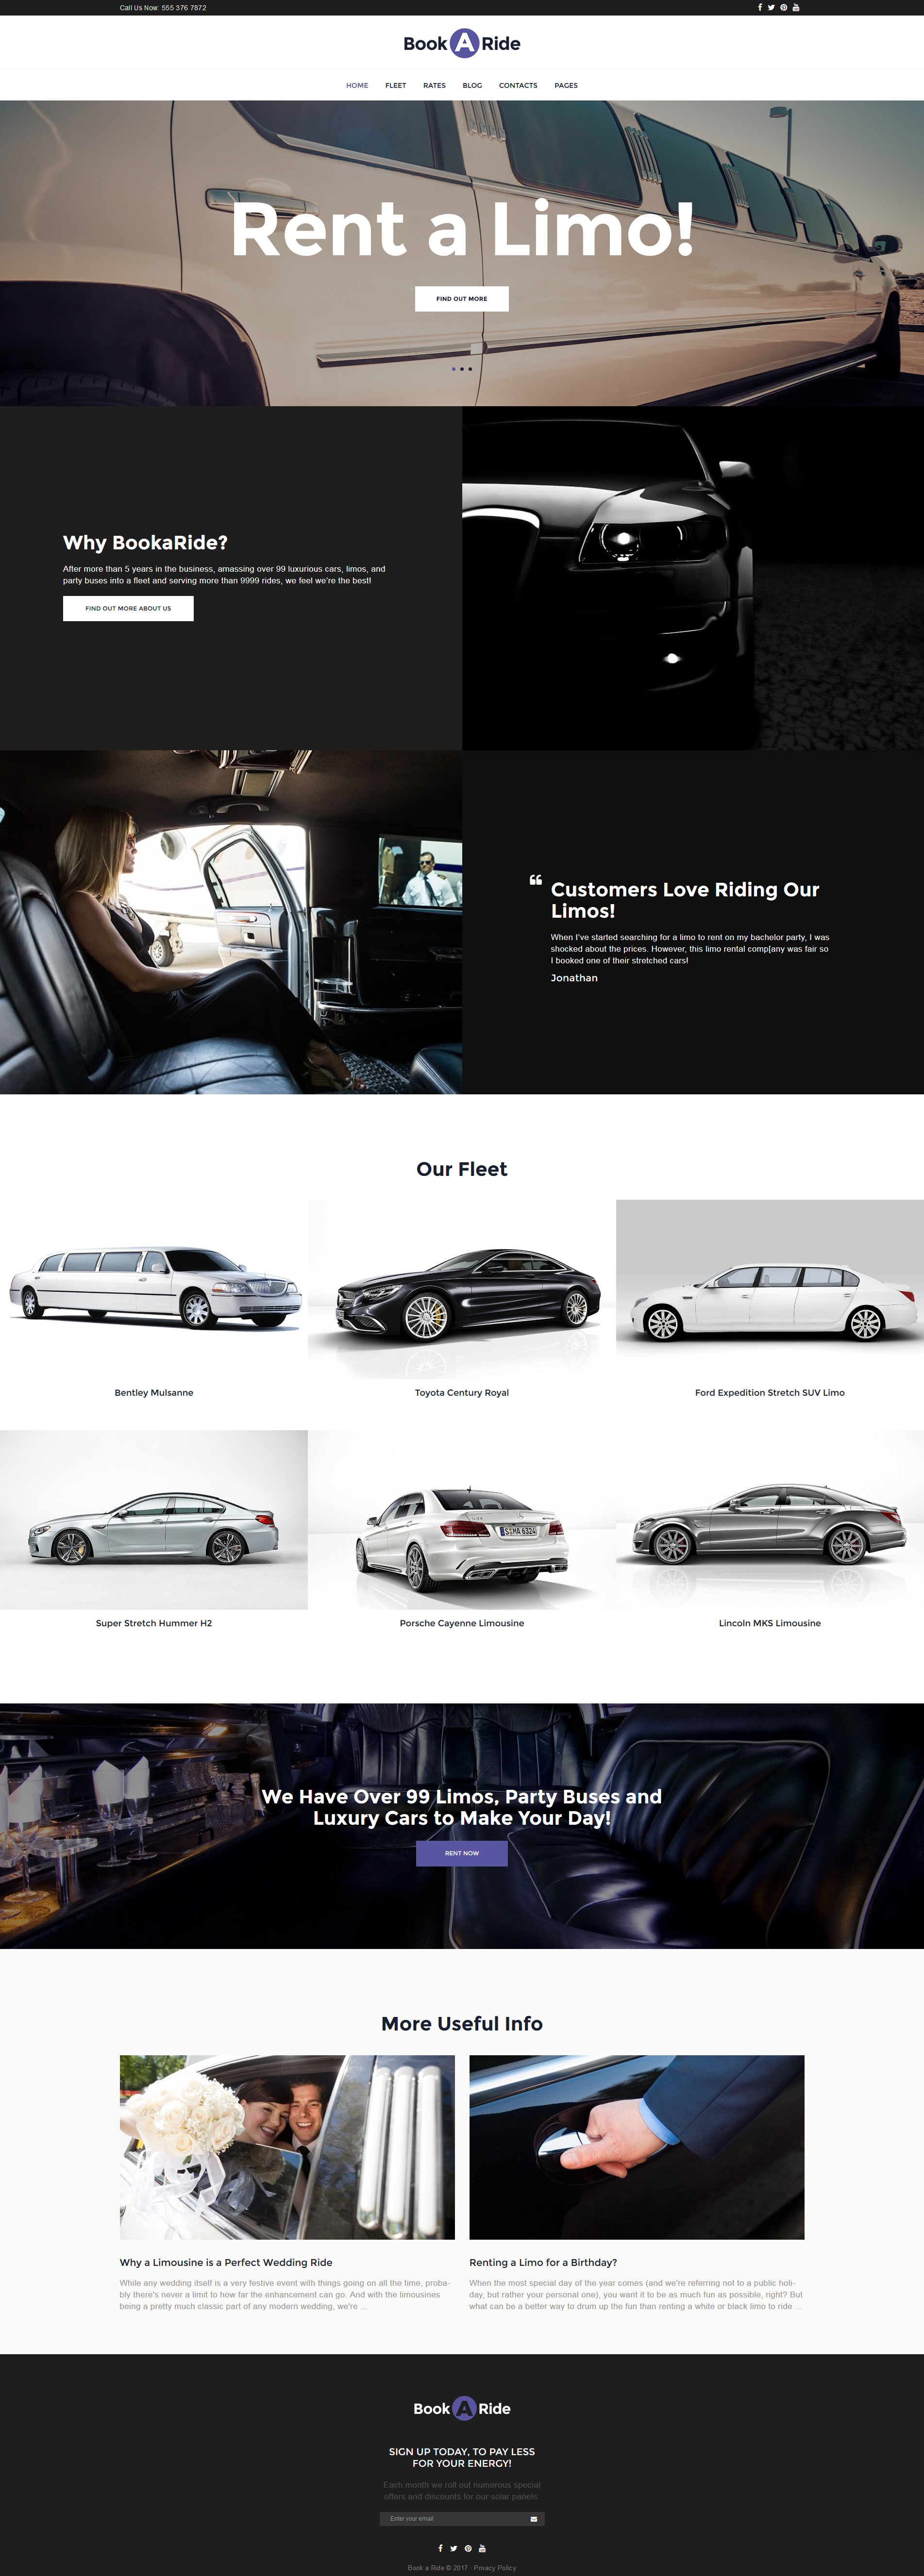 BookaRide - Limousine Car Rental Services WordPress Theme